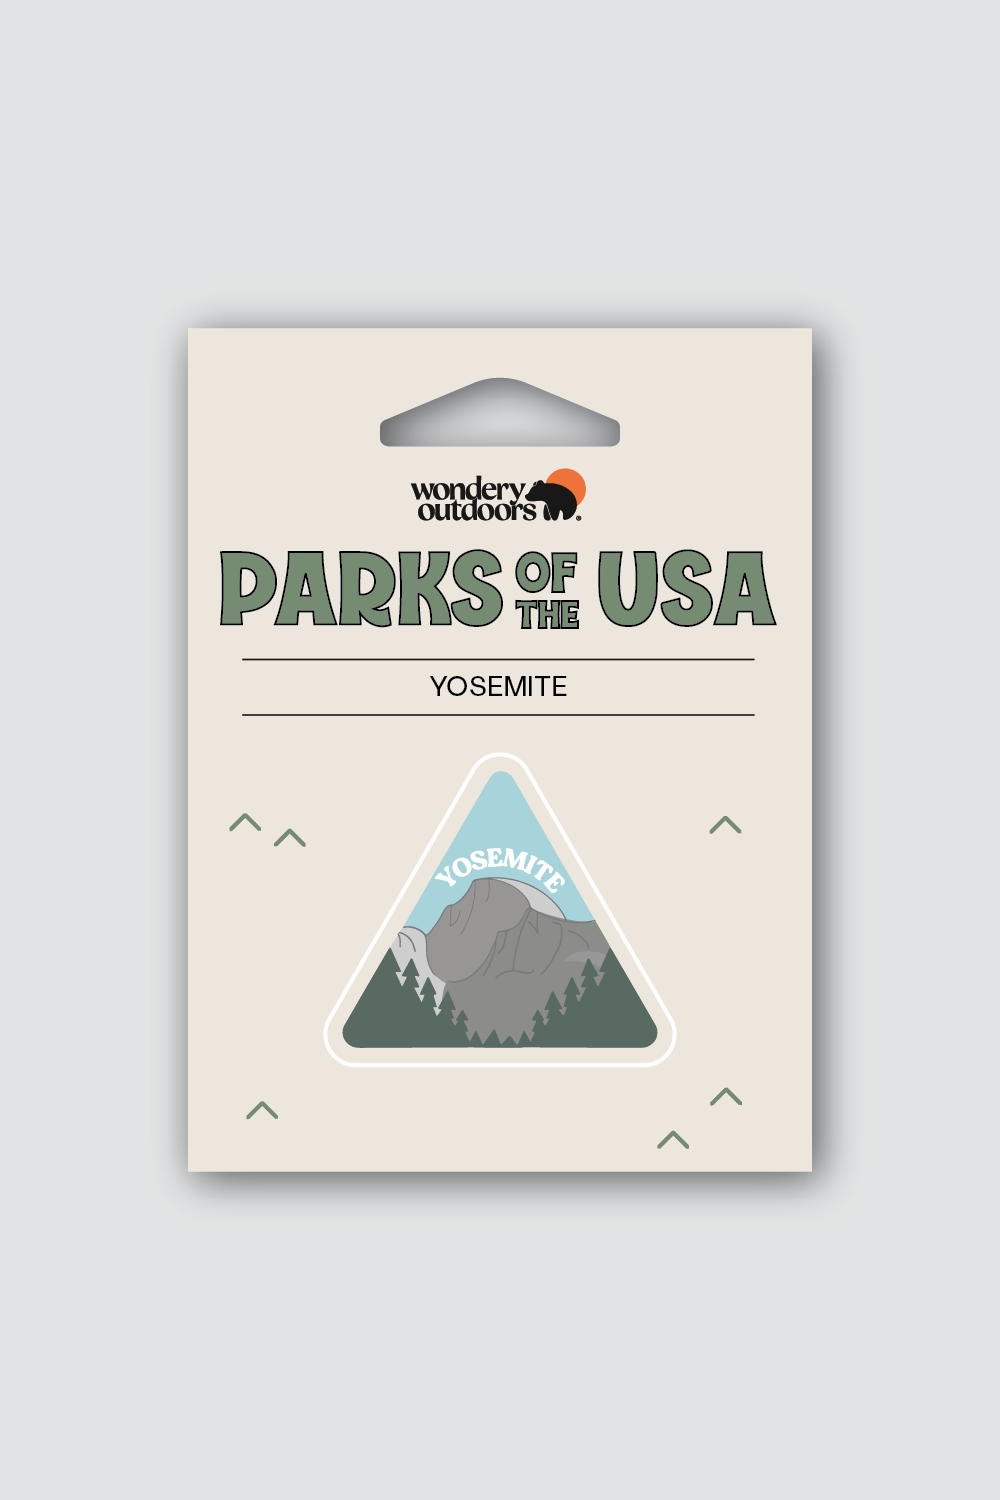 #national park_yosemite _USA National Parks souvenir sticker gift sets